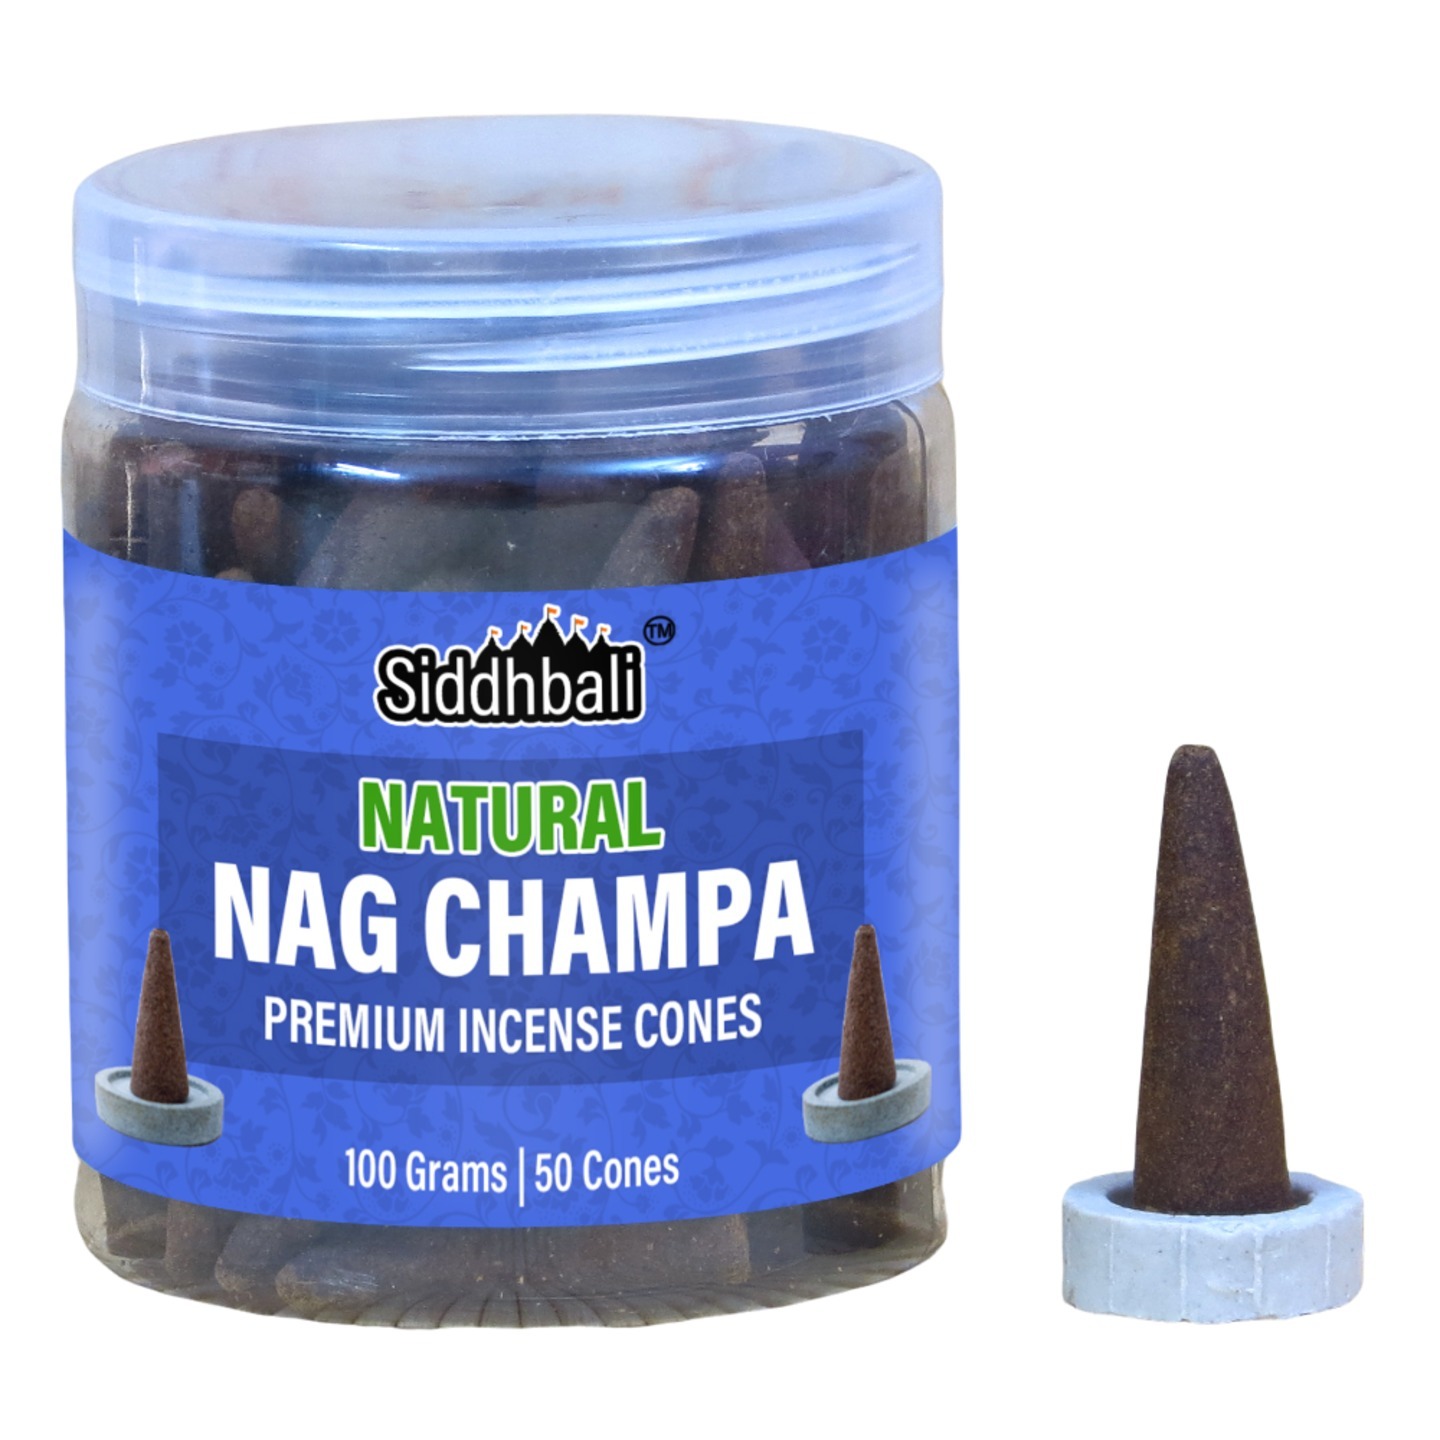 Nag Champa Premium Incense Cones Dhoop